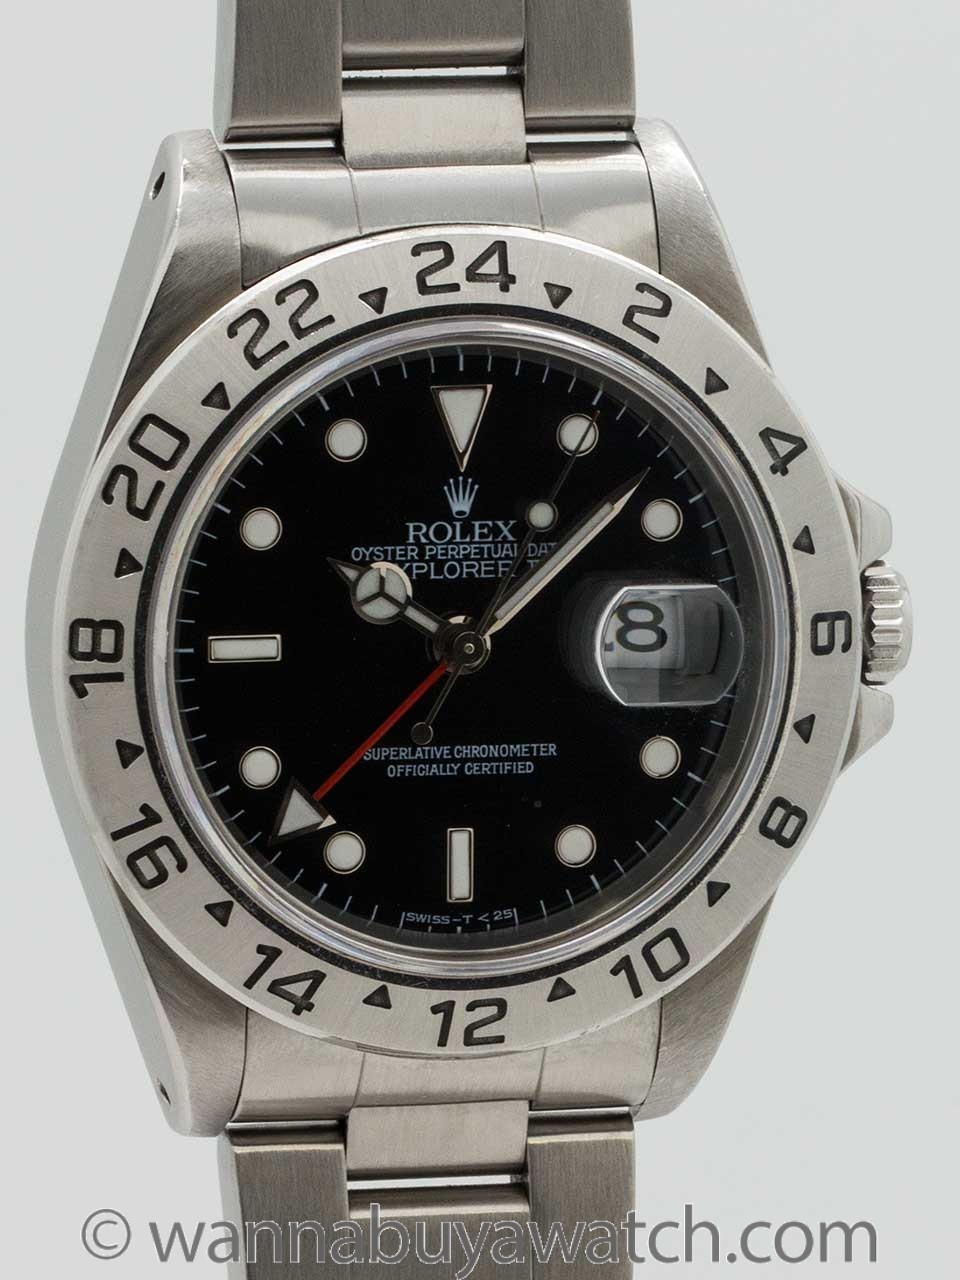 Rolex Explorer II ref 16570 circa 1996 